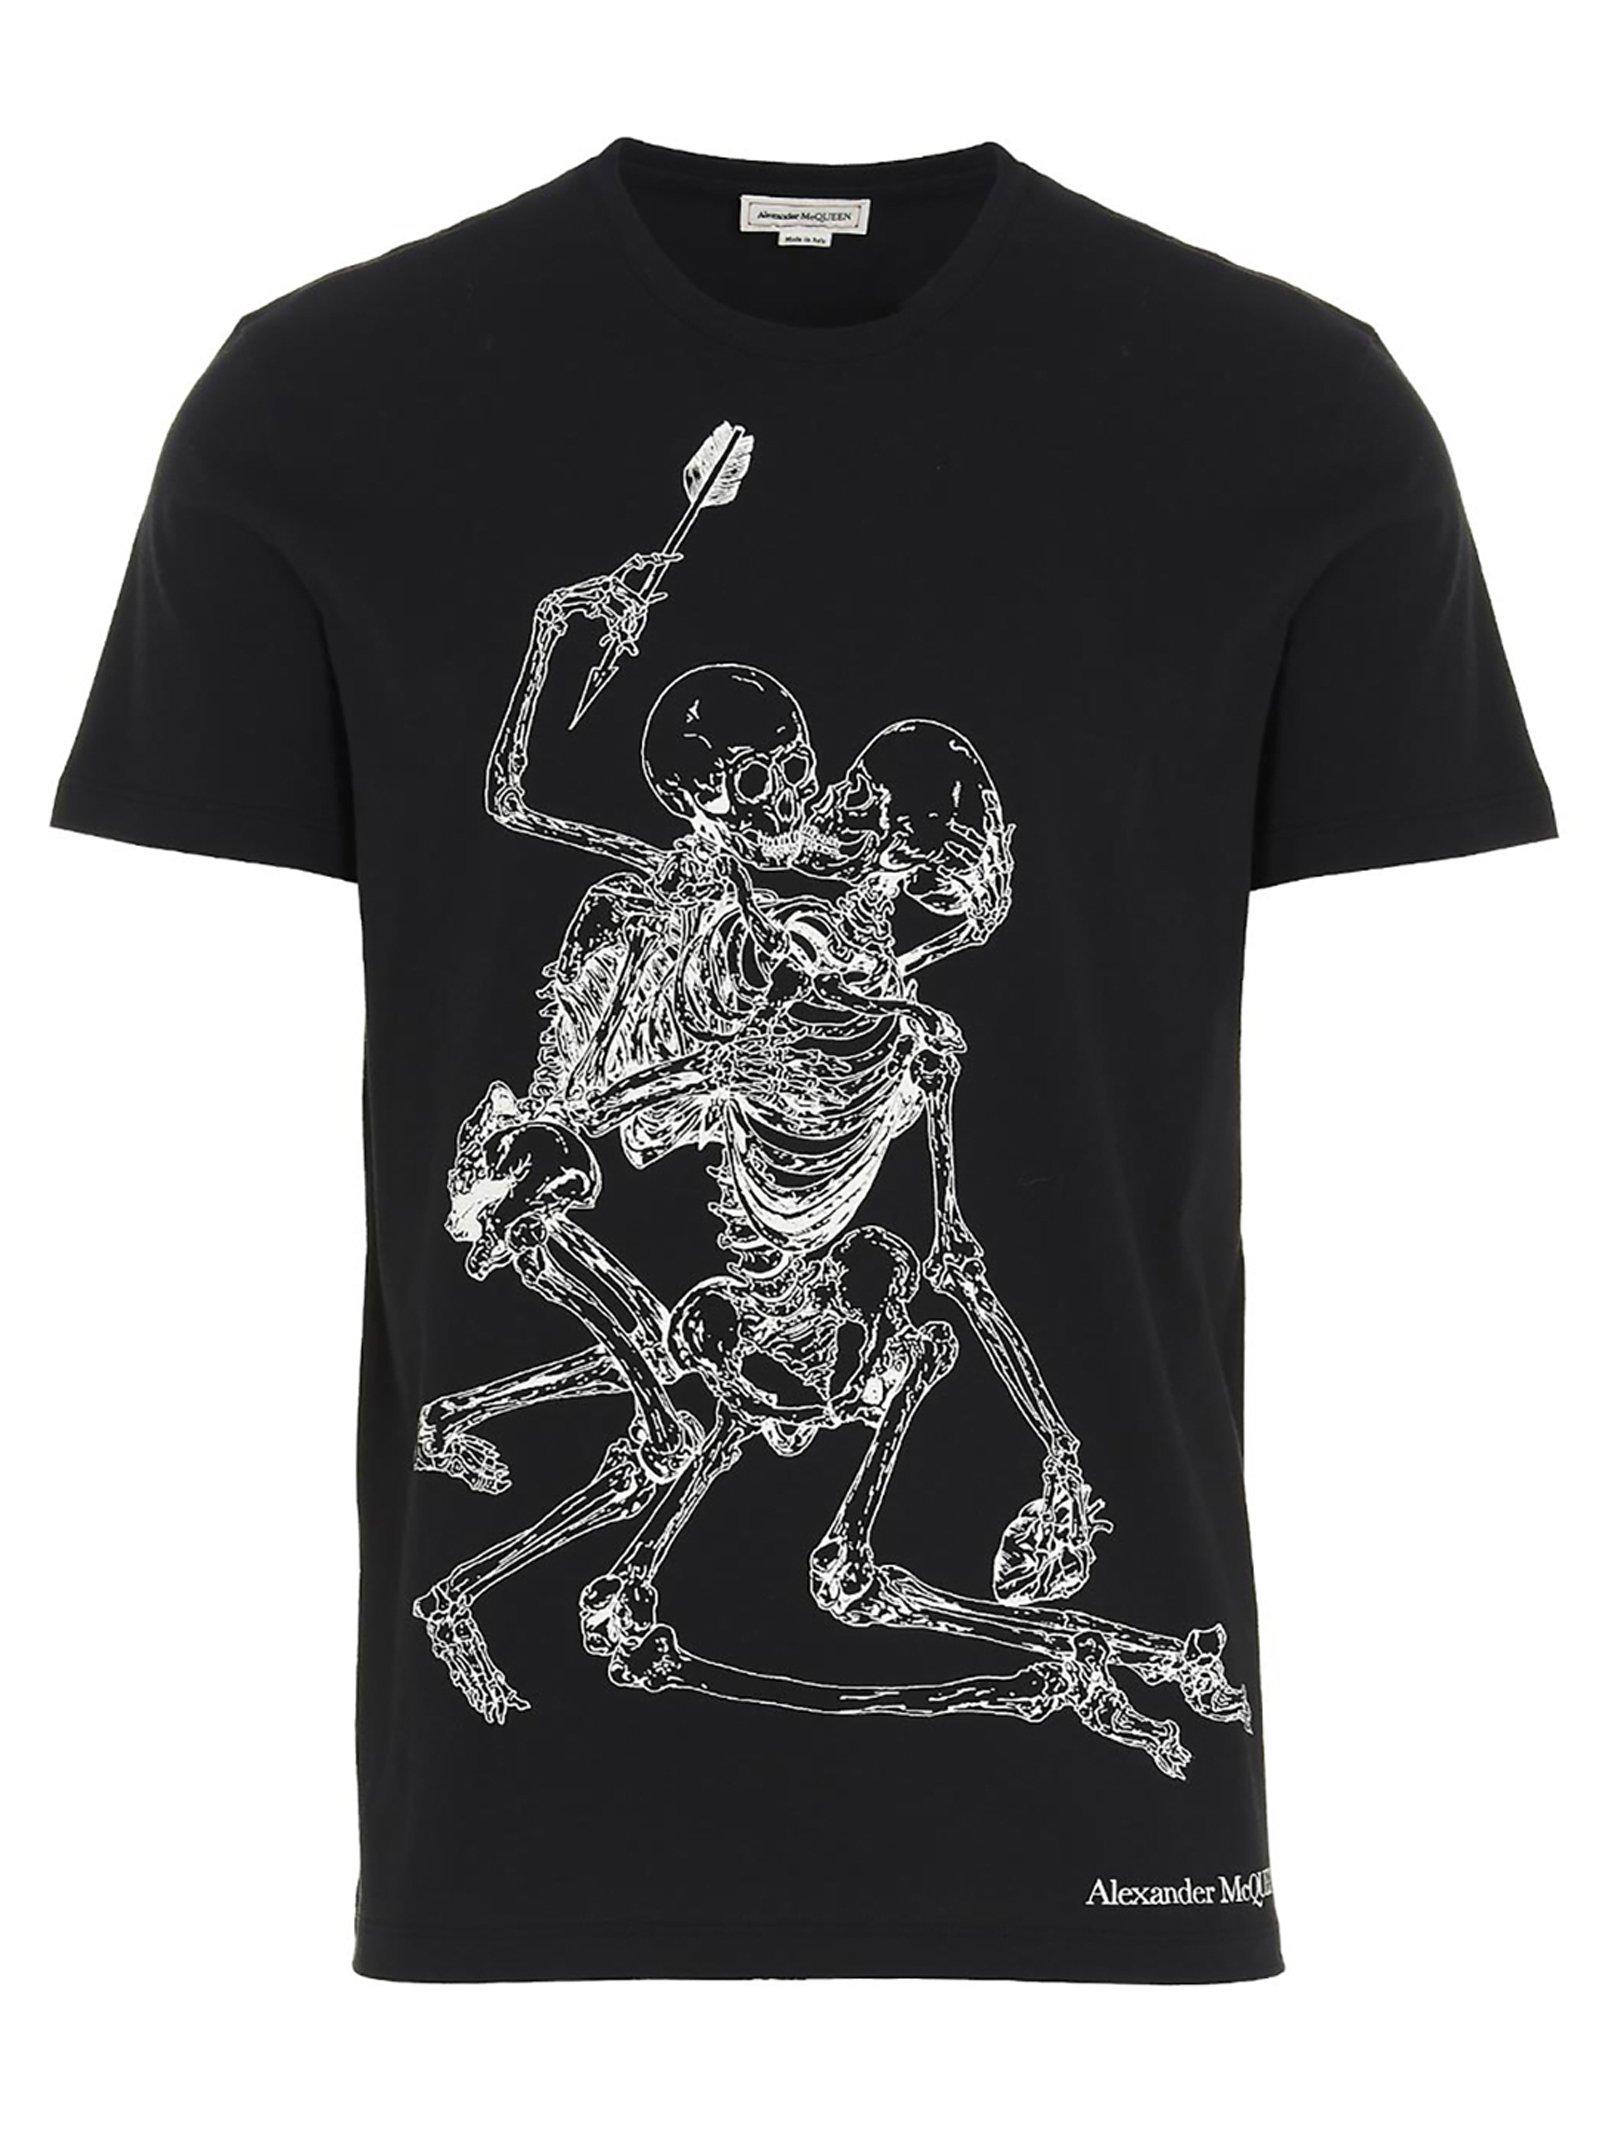 Alexander McQueen Cotton Skeleton T-shirt in Black for Men - Lyst